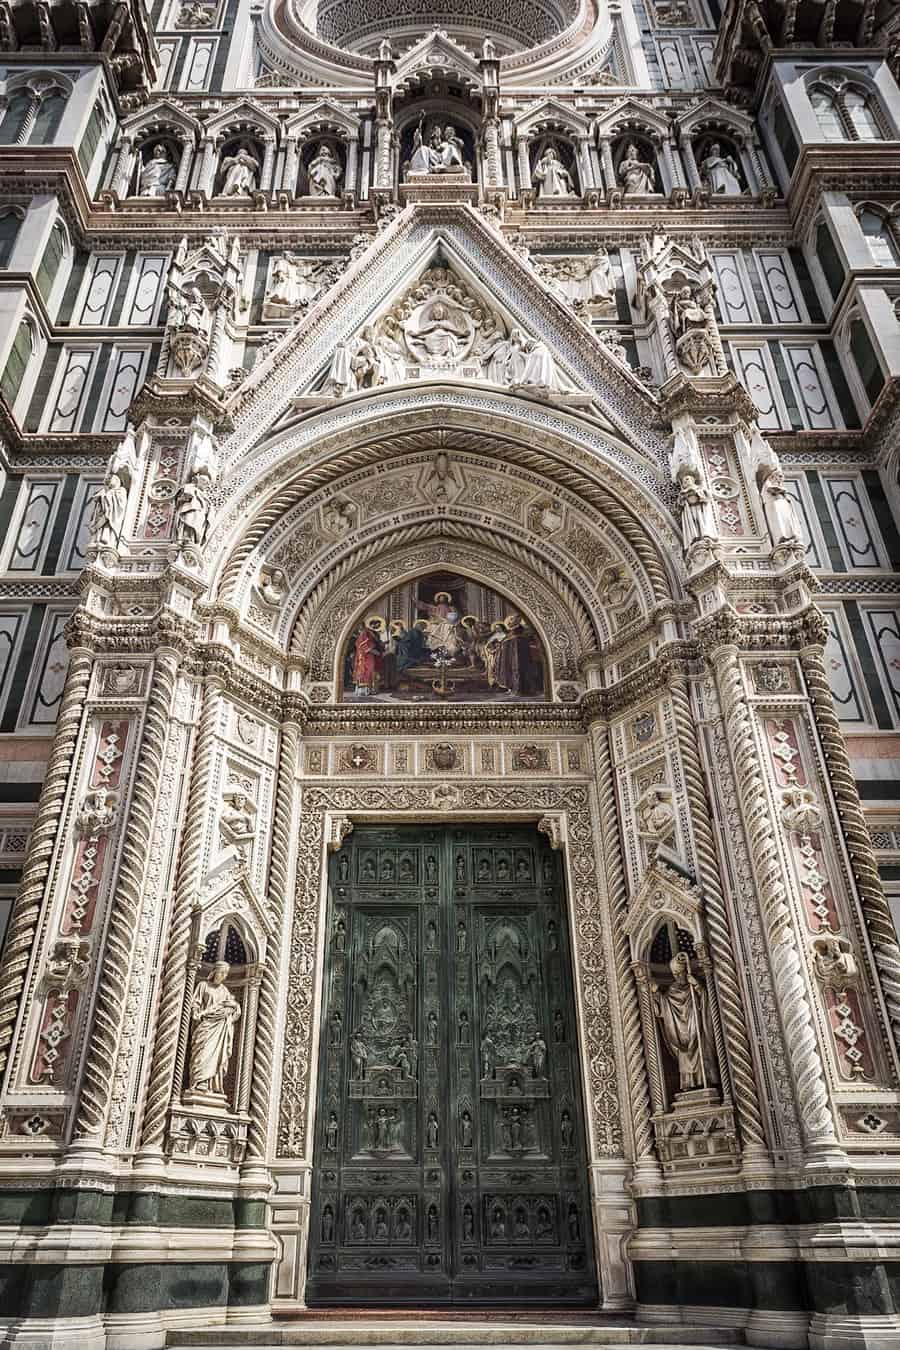  Door, Duomo, Florence, by Rick McEvoy Travel Photographer 